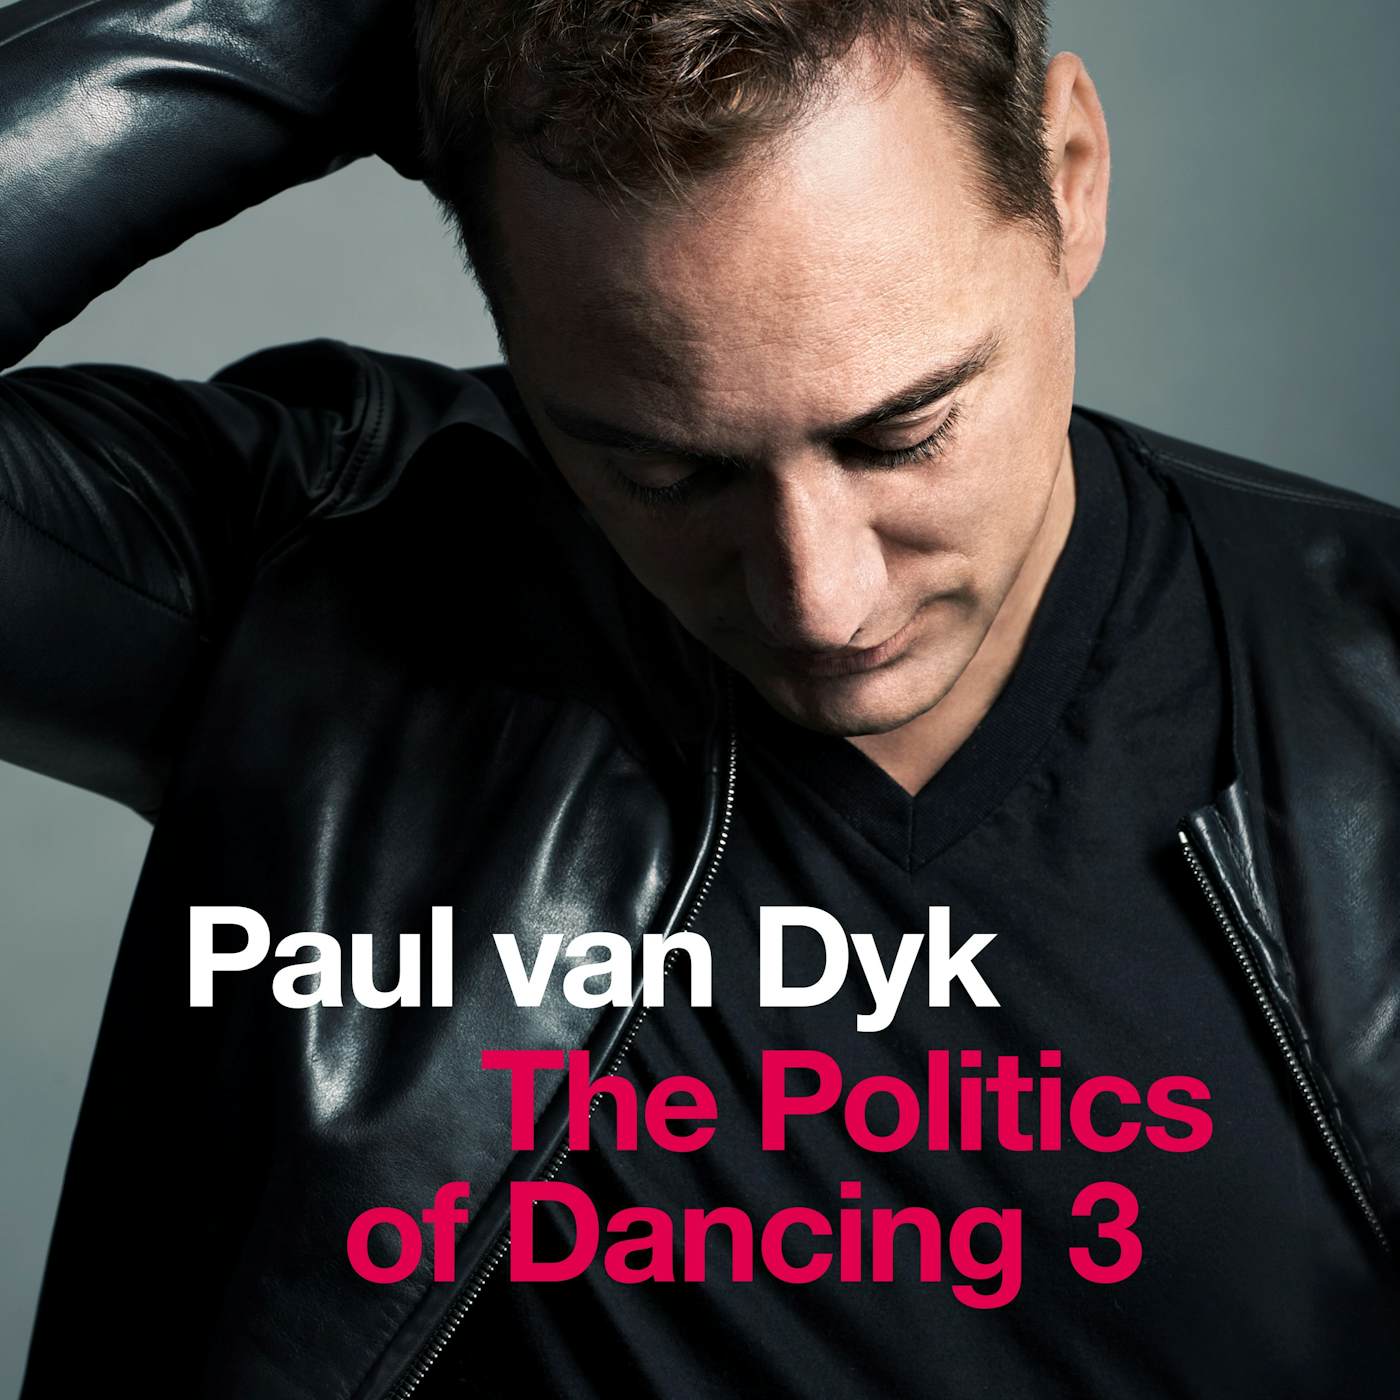 PAUL VAN DYK-THE POLITICS OF DANCING 3 CD